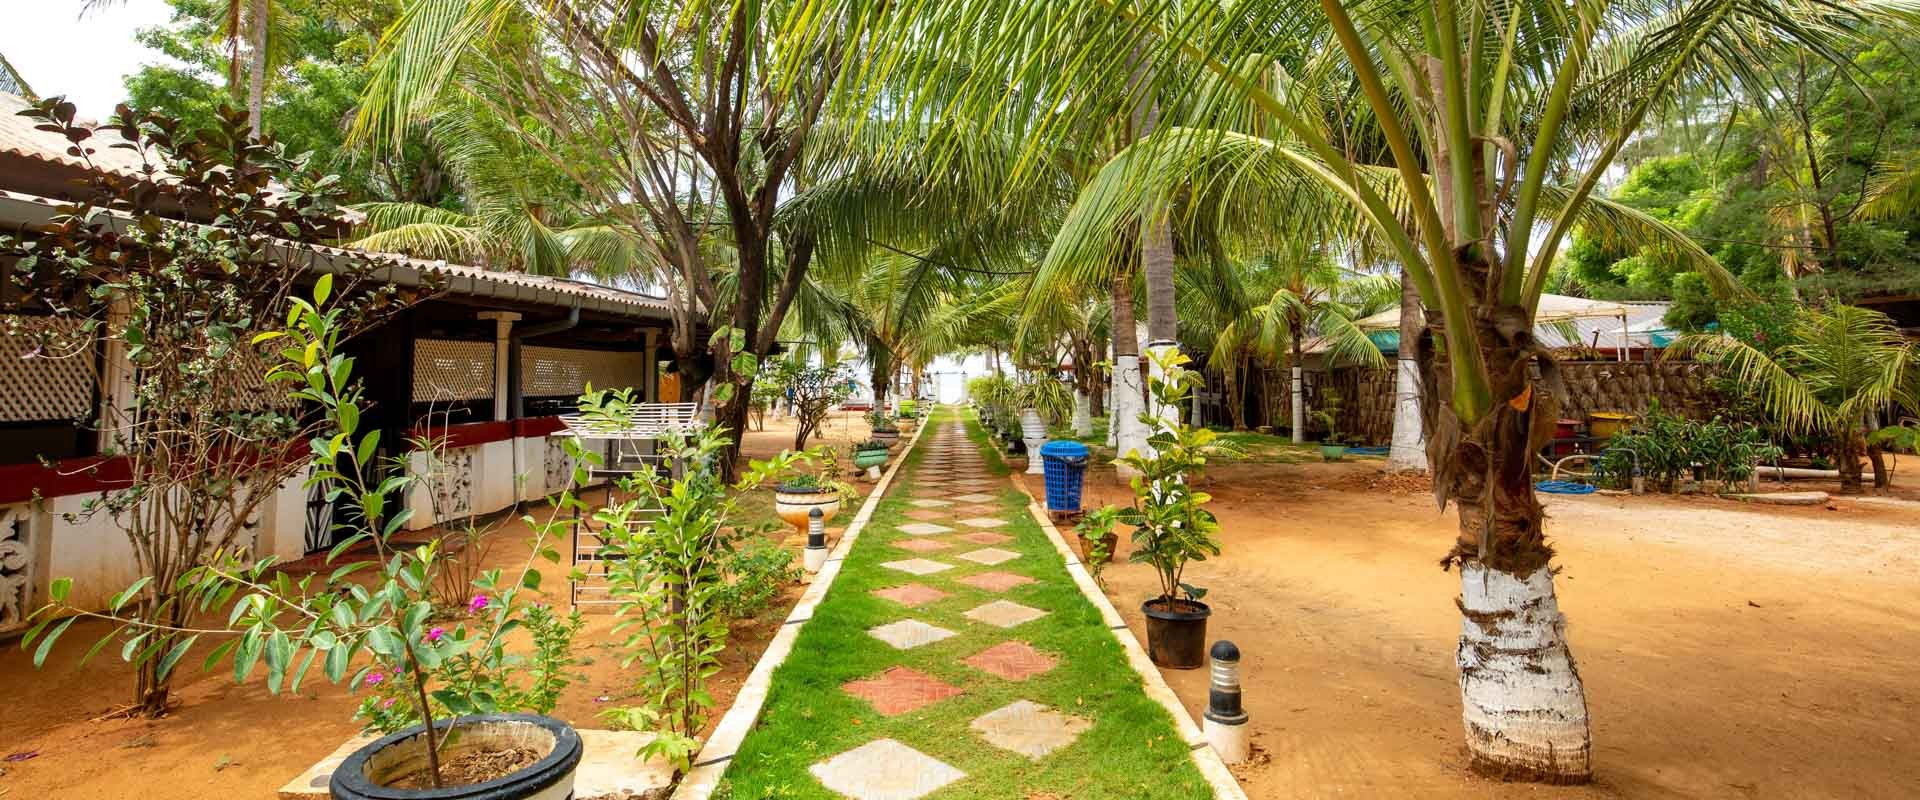 Coconut Beach Lodge - Gateway to East